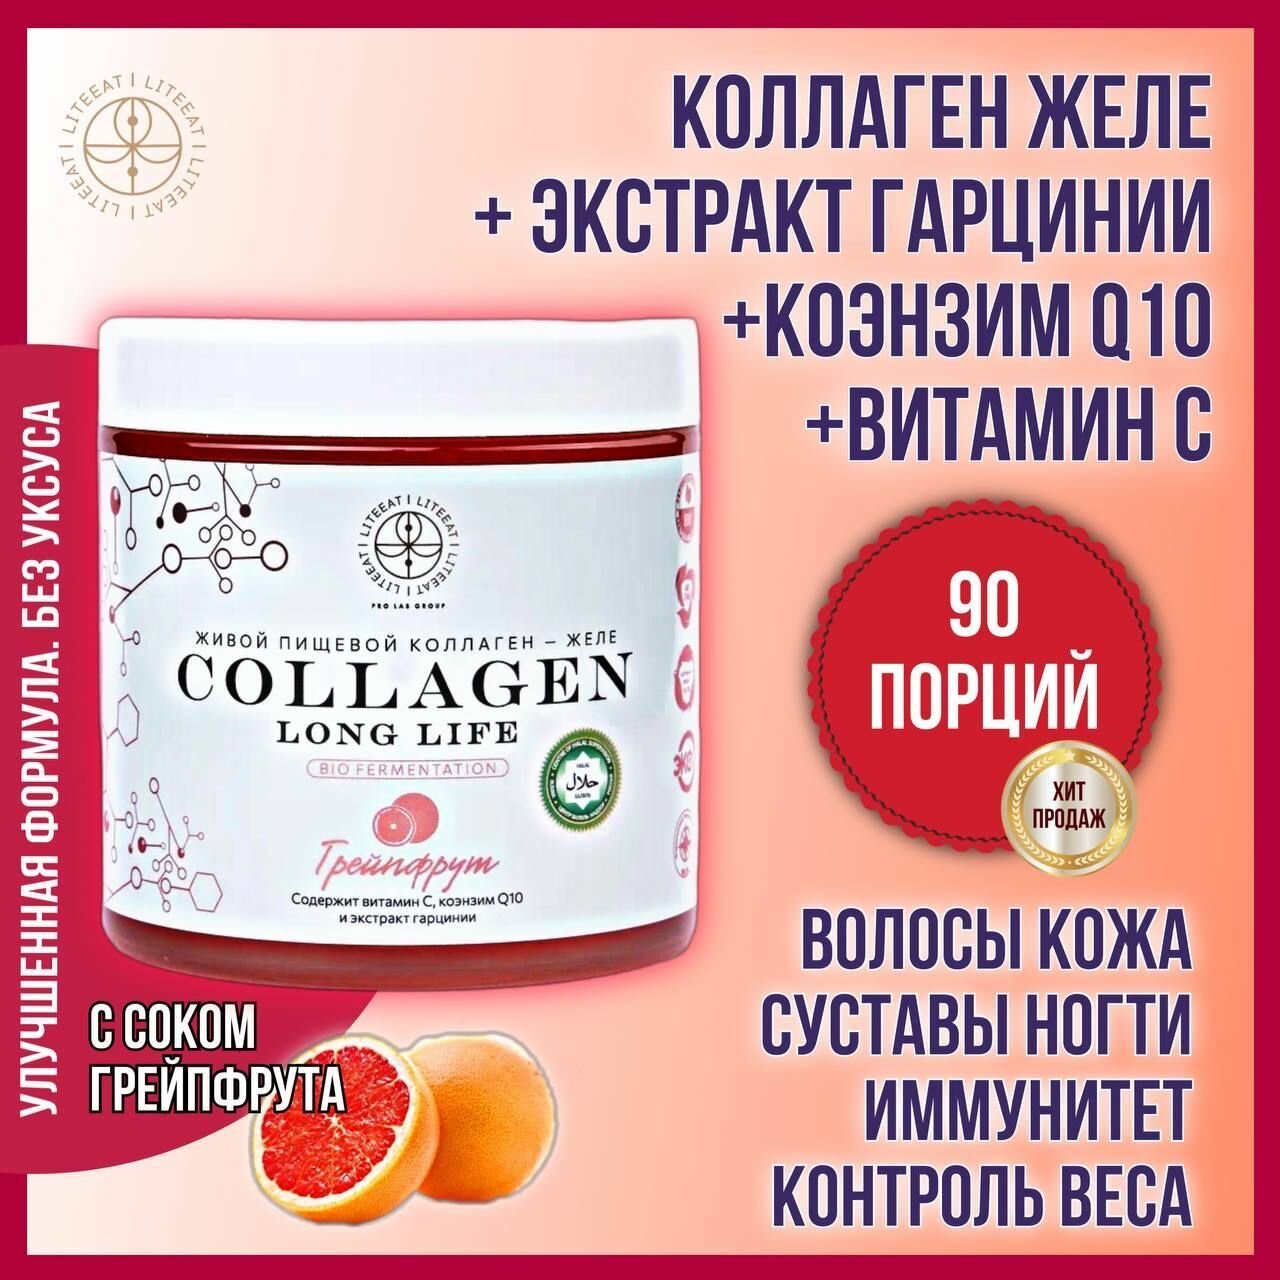 Натуральный пищевой коллаген желе Халяль 1, 2, 3 типа со вкусом грейпфрута 500 грамм